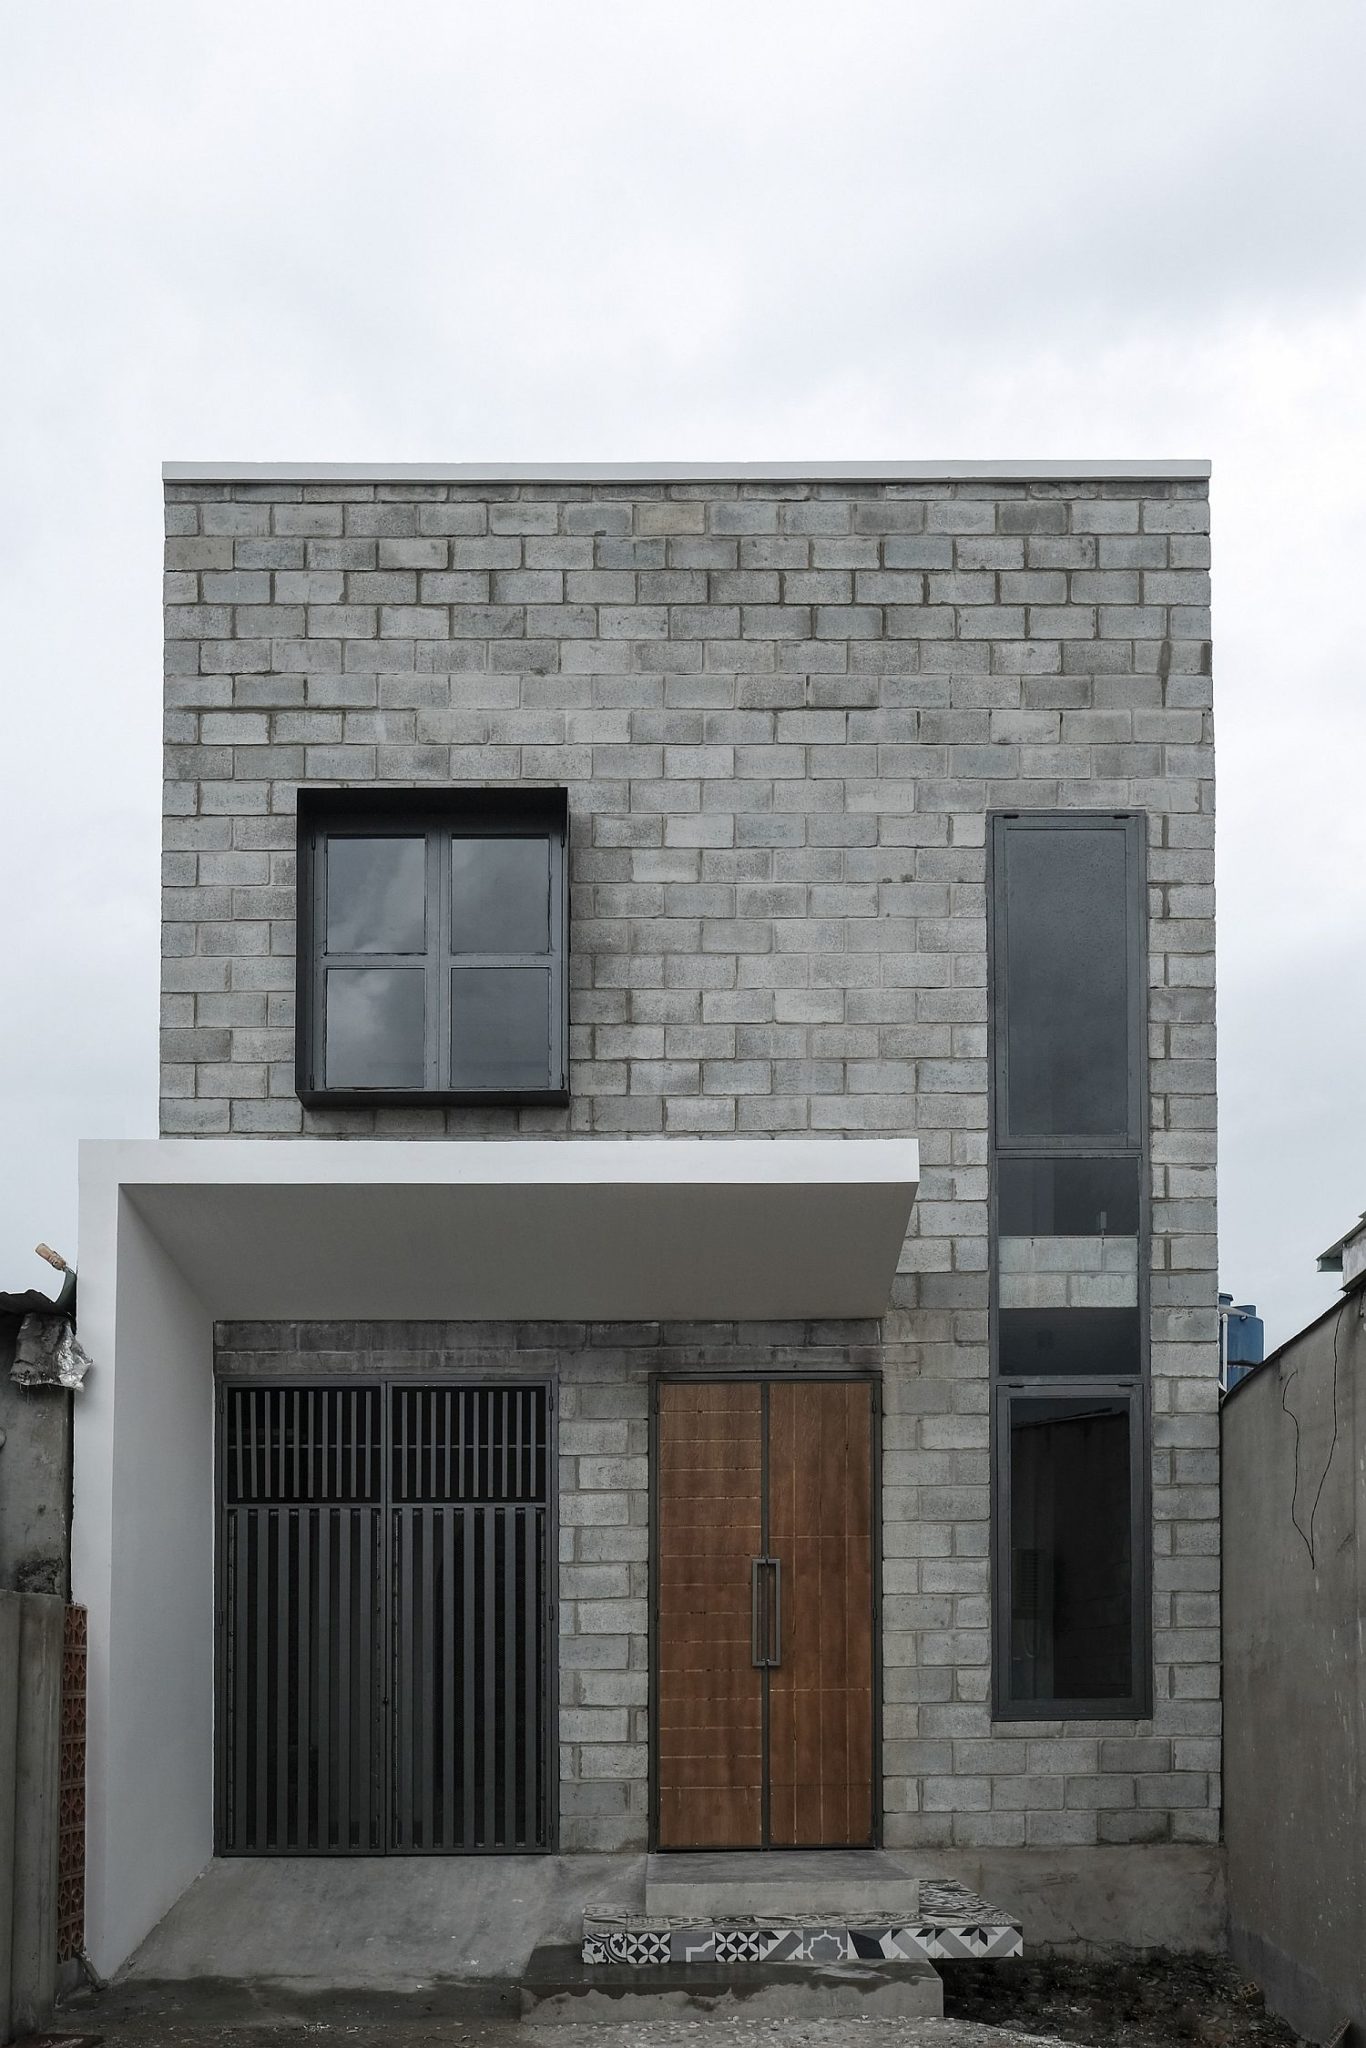 Concrete exterior of the home with wooden door